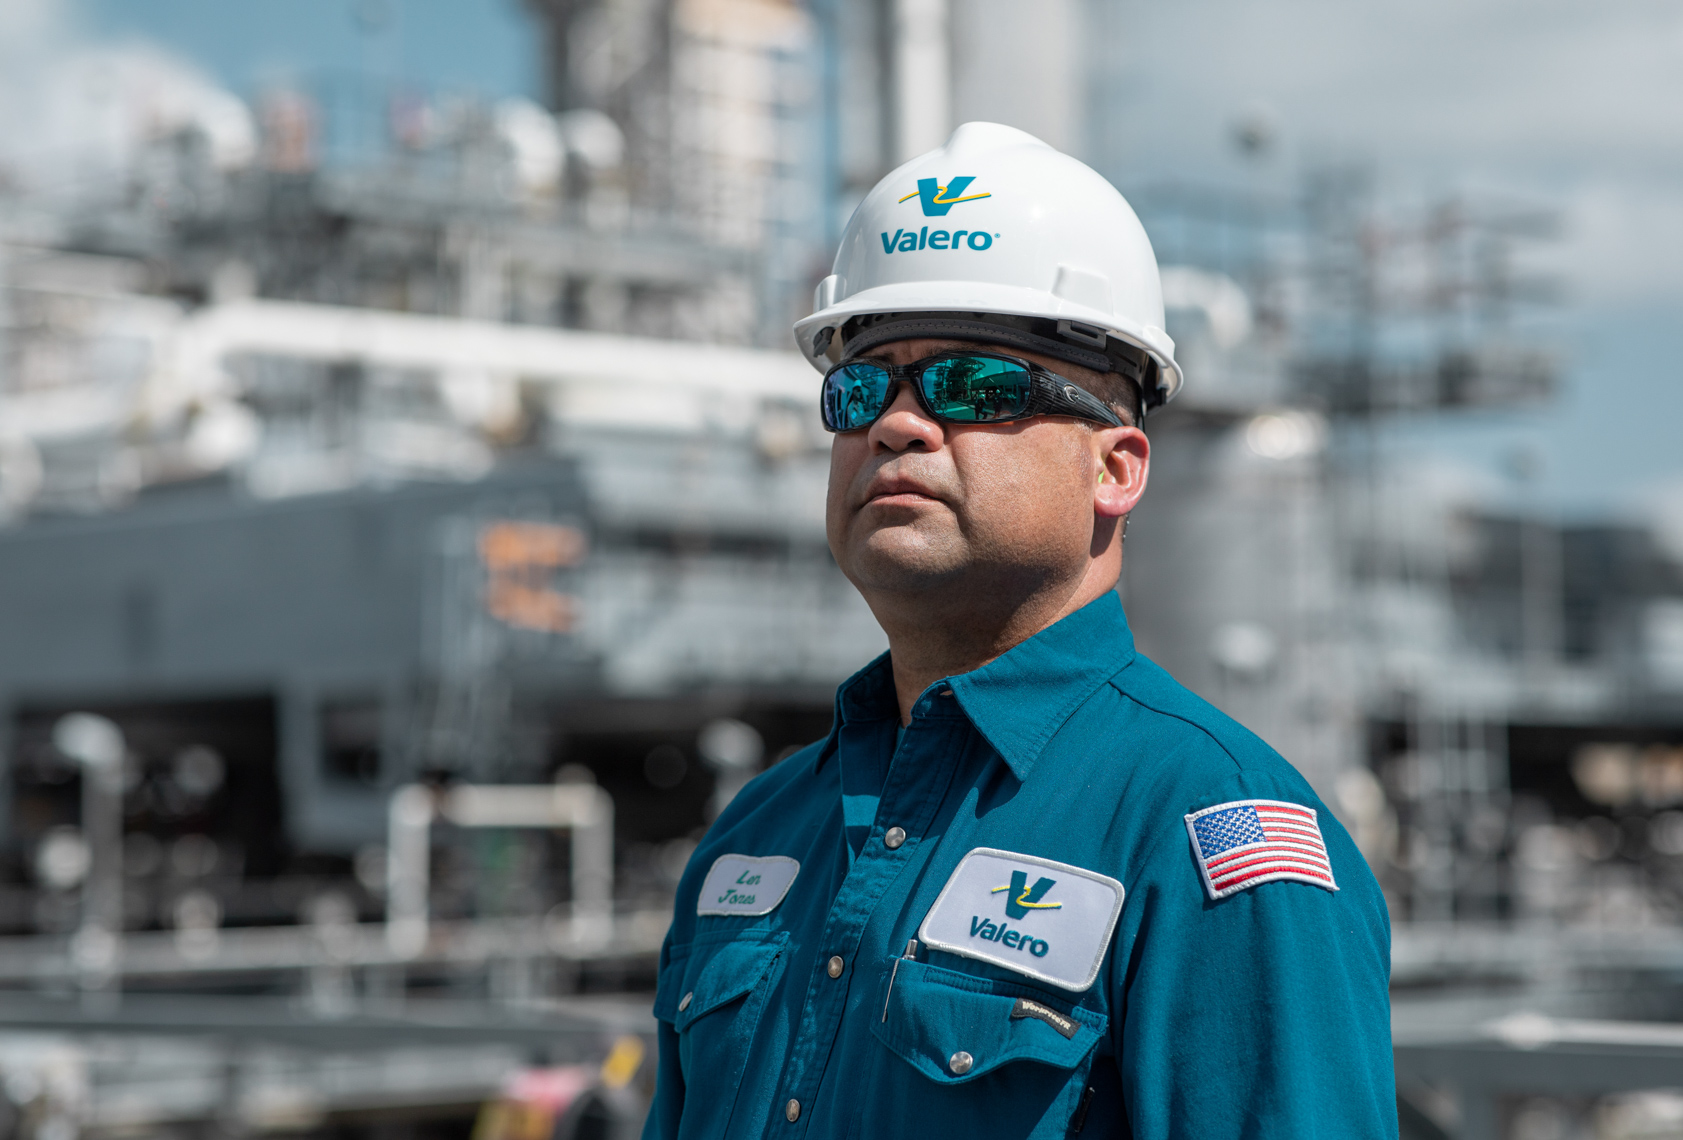 valero-oil-gas-refinery-worker-portrait-jason-risner-photogrpahy-texas